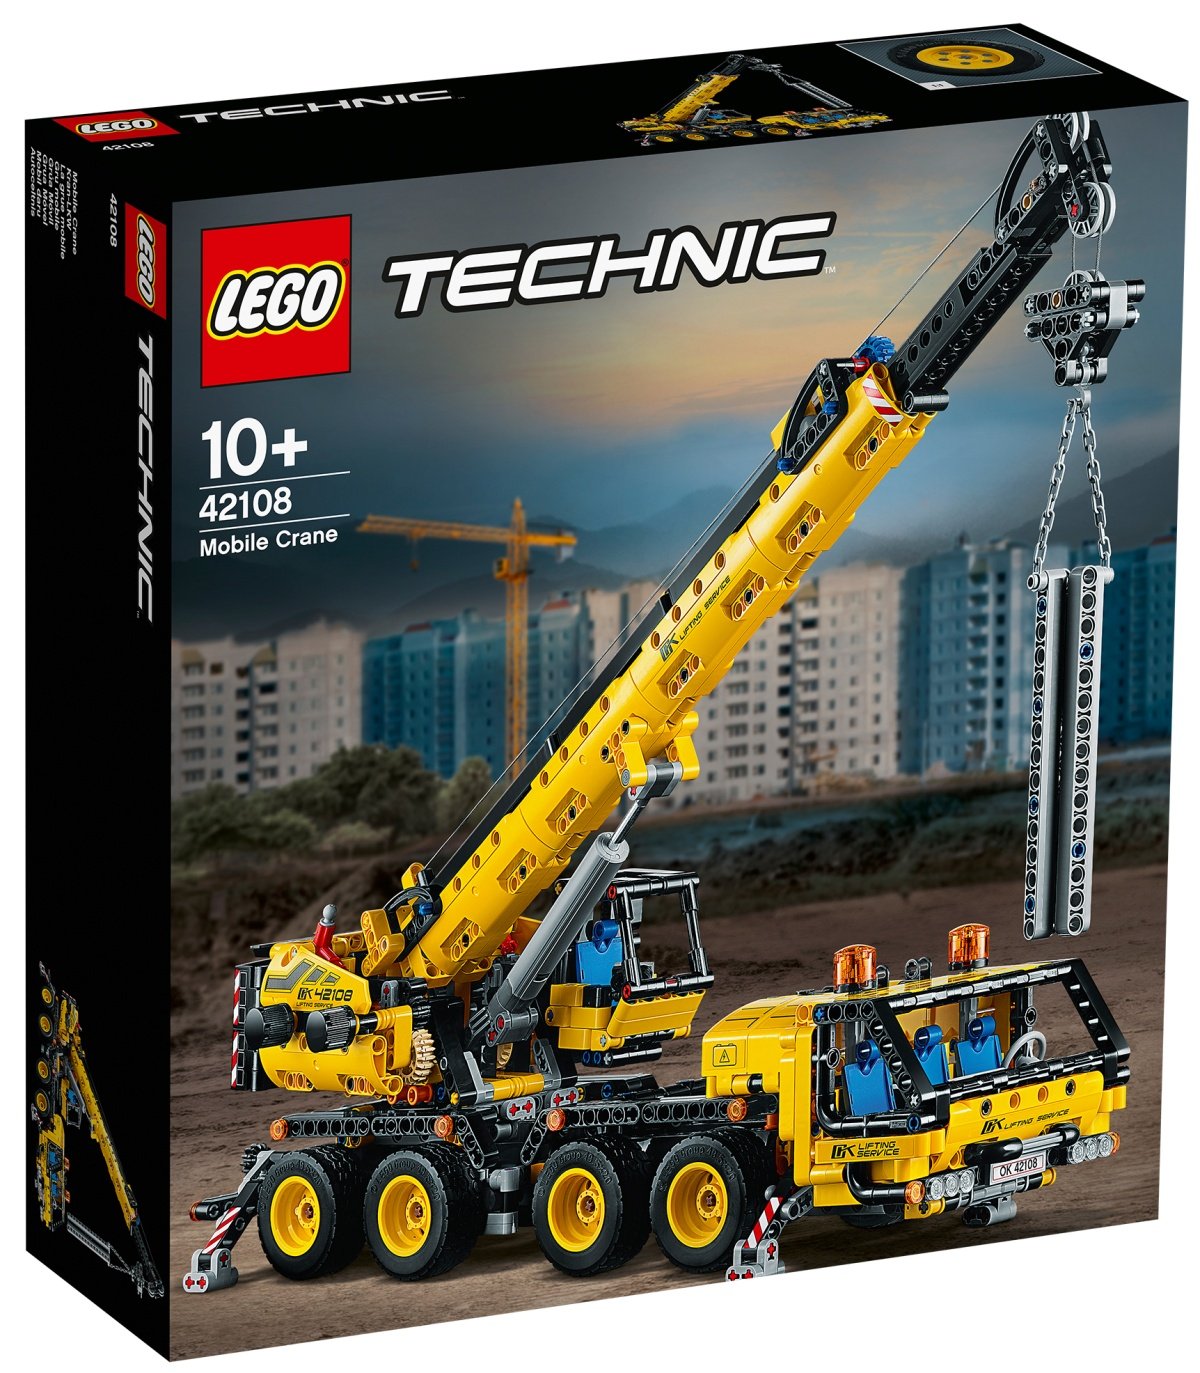 Lego Technic Sets Extreme Adventure/Crane/Porsche/Hoverplane & MORE New 